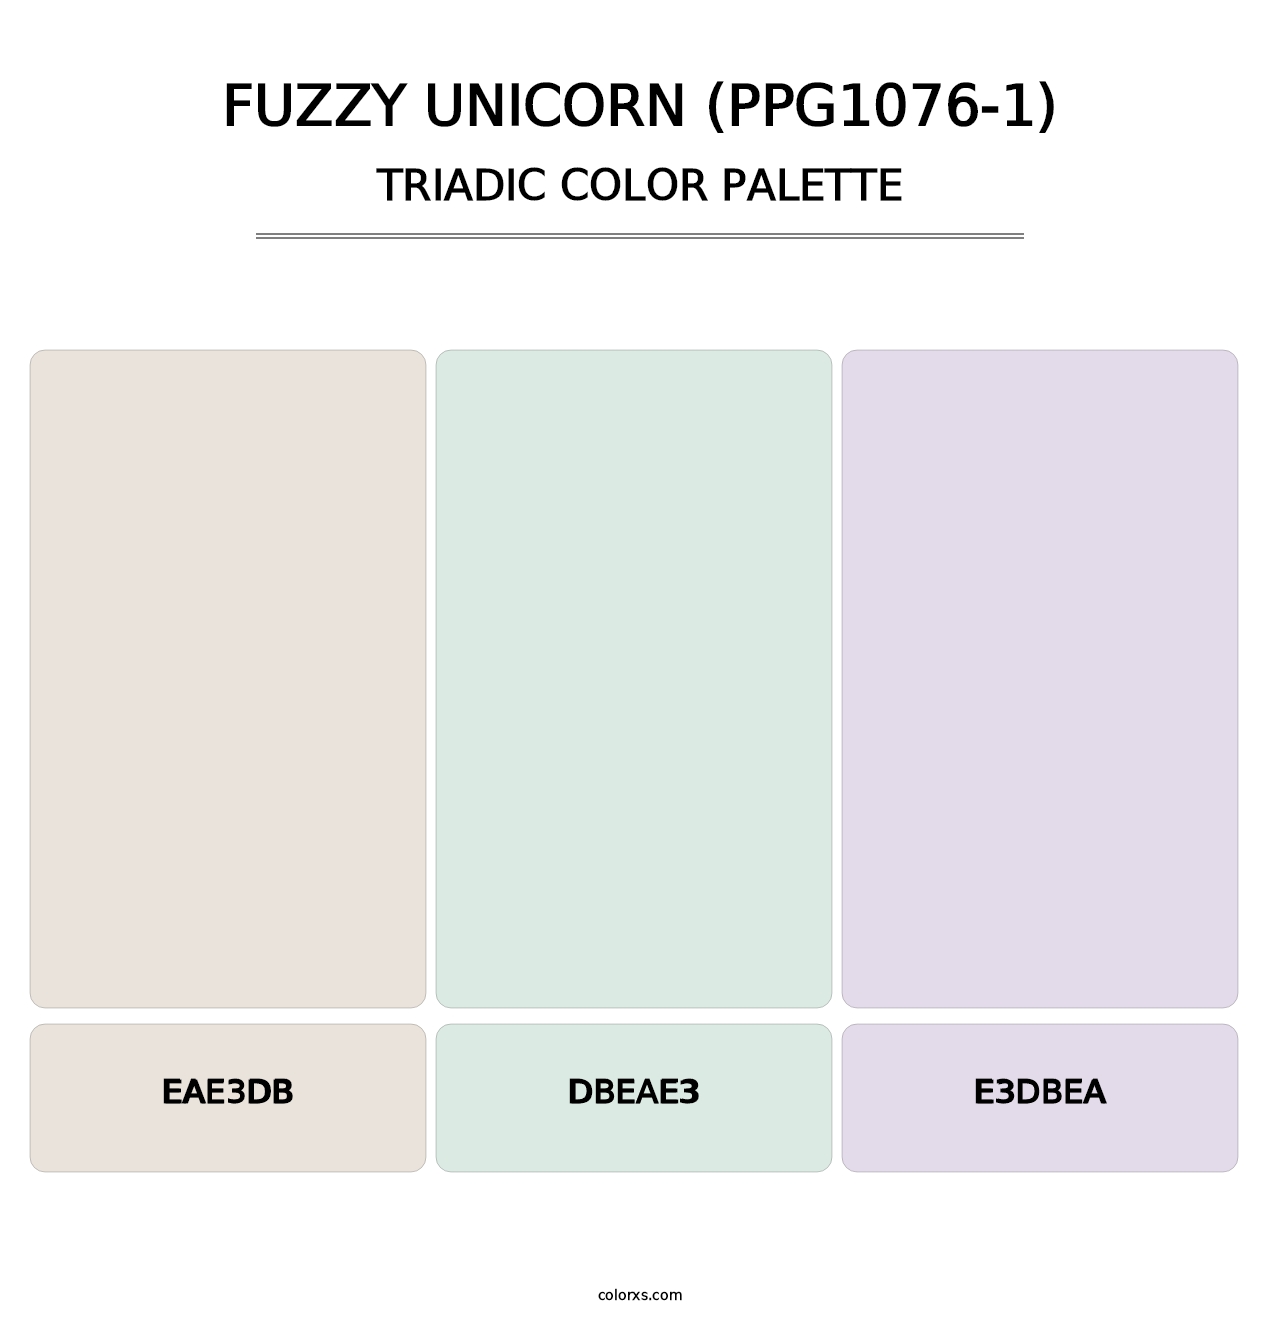 Fuzzy Unicorn (PPG1076-1) - Triadic Color Palette